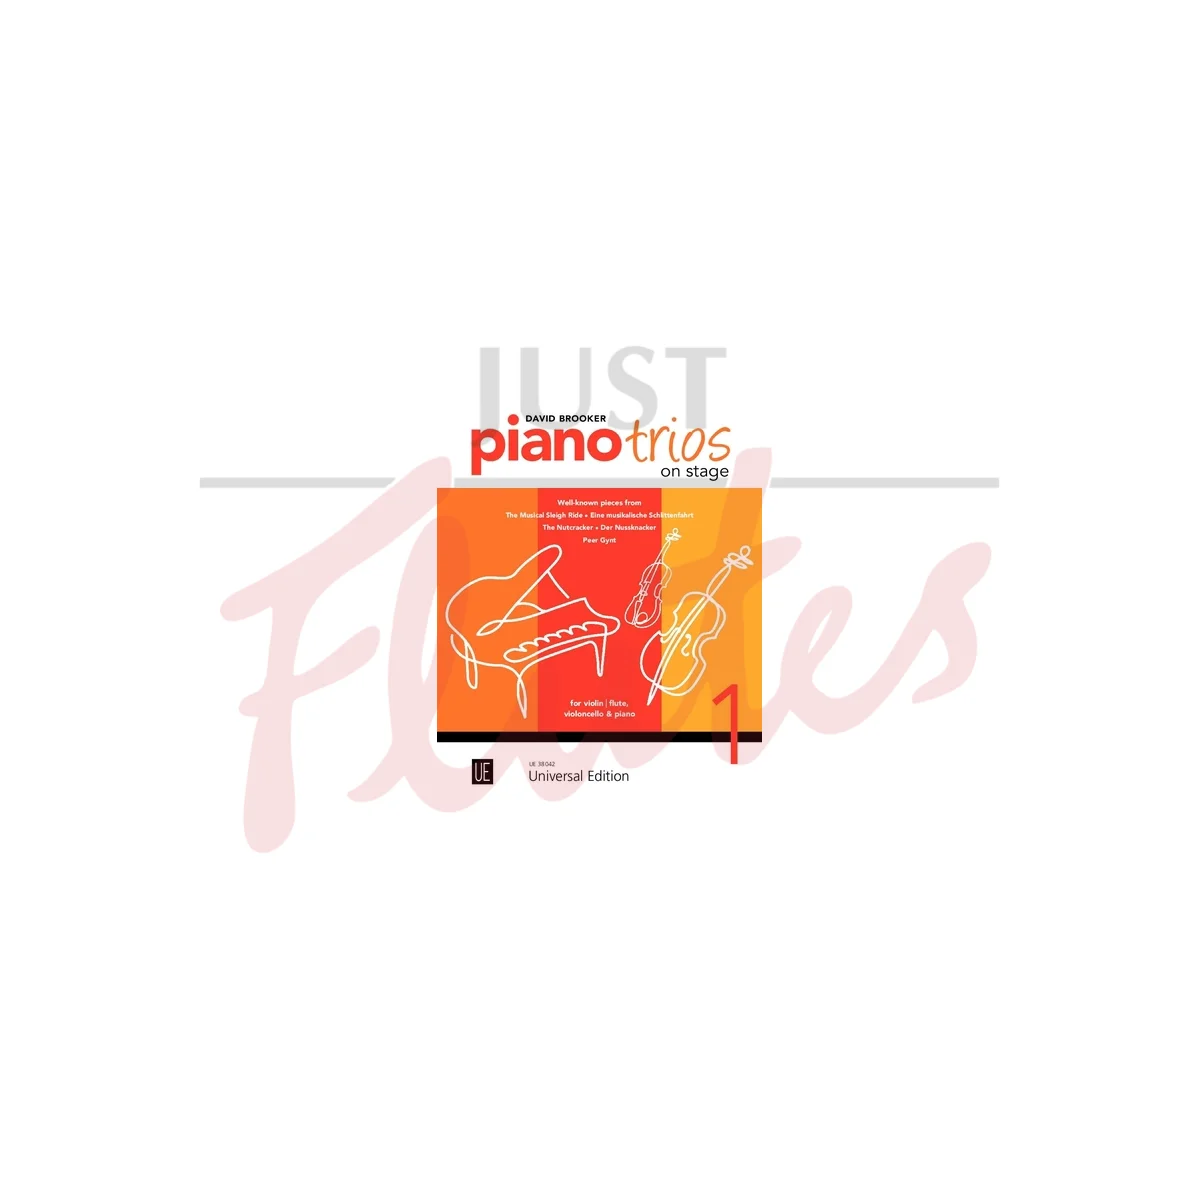 Piano Trios on Stage Vol. 1 for Flute or Violin, Cello and Piano